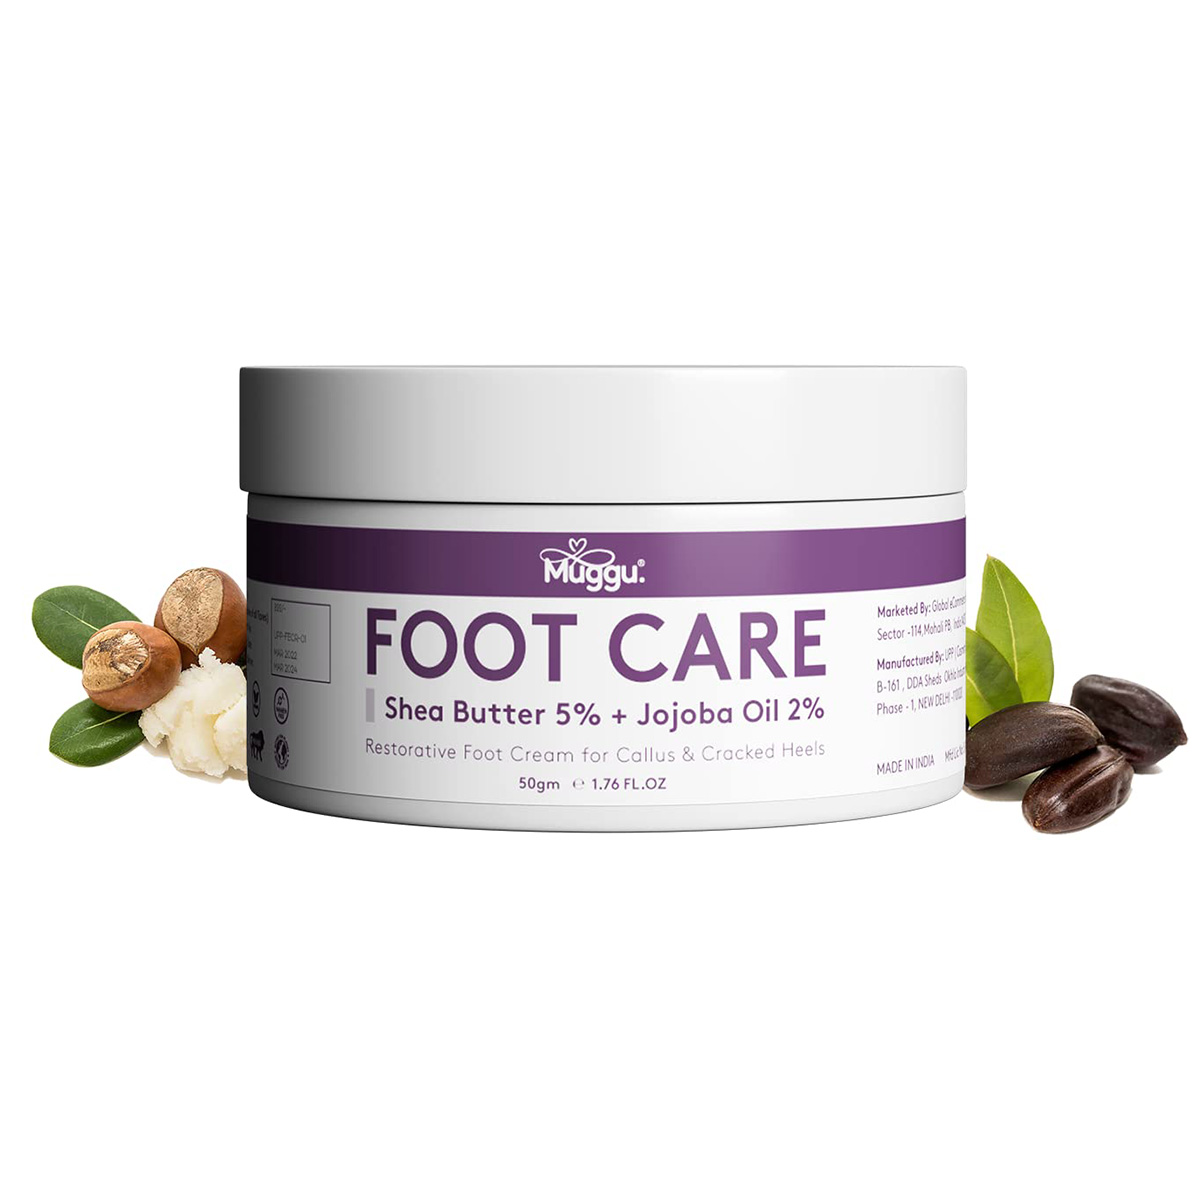 Muggu Skin Care Foot Care Cream With 5% Shea Butter & 2% Jojoba Oil, 50gm